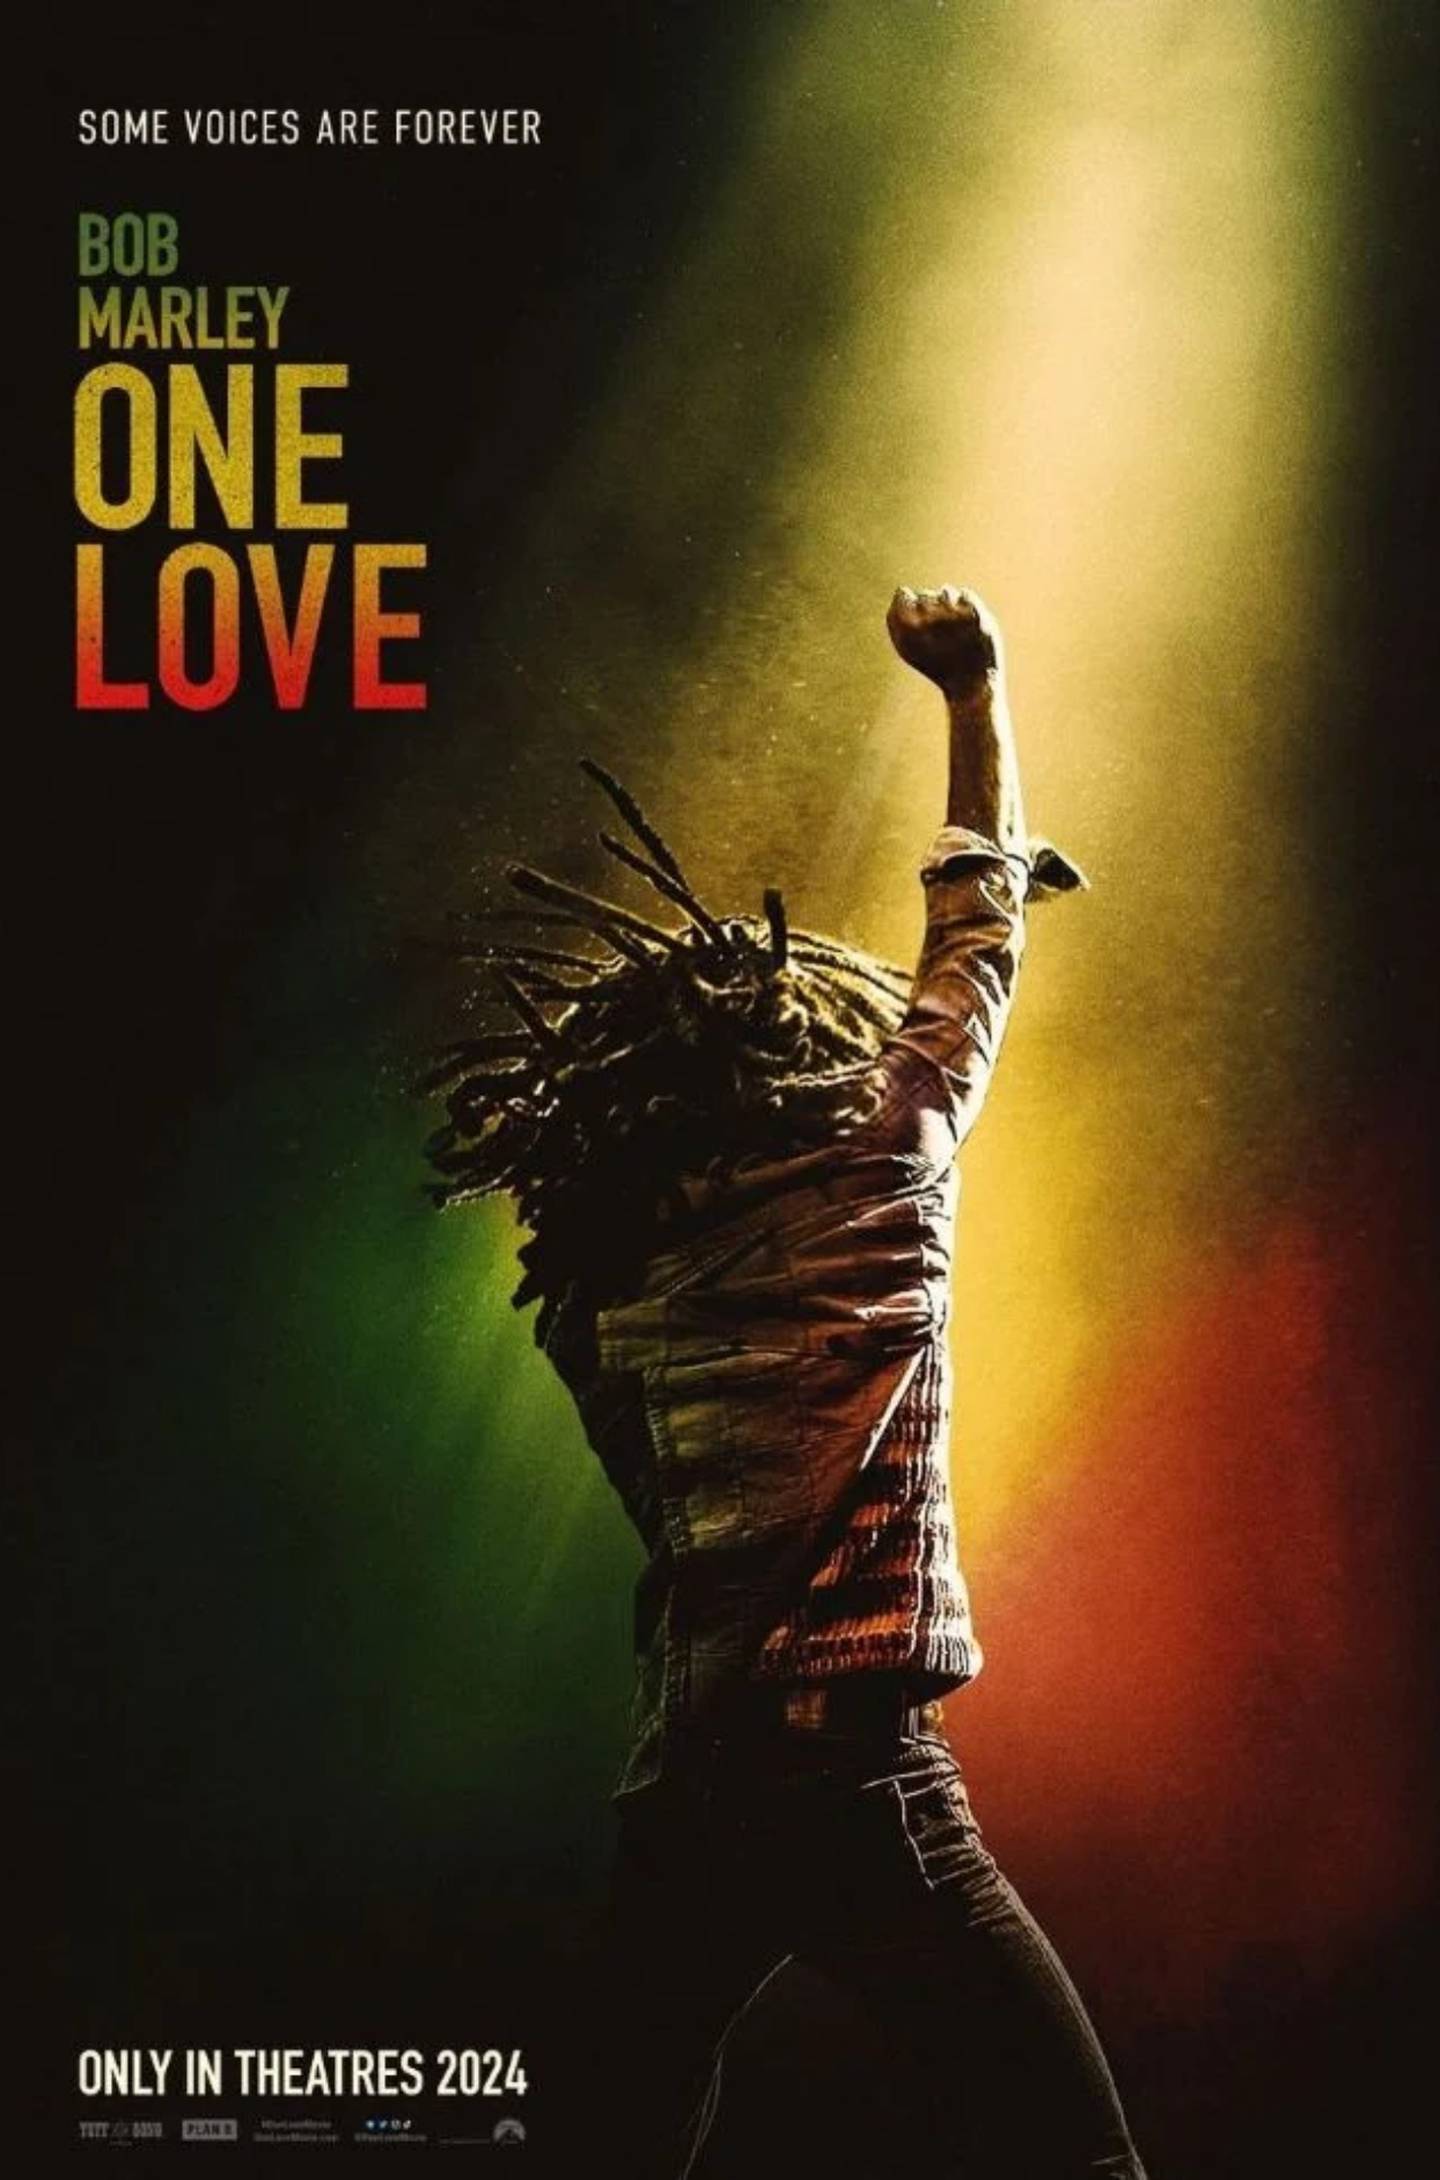 Bob Marley cantando